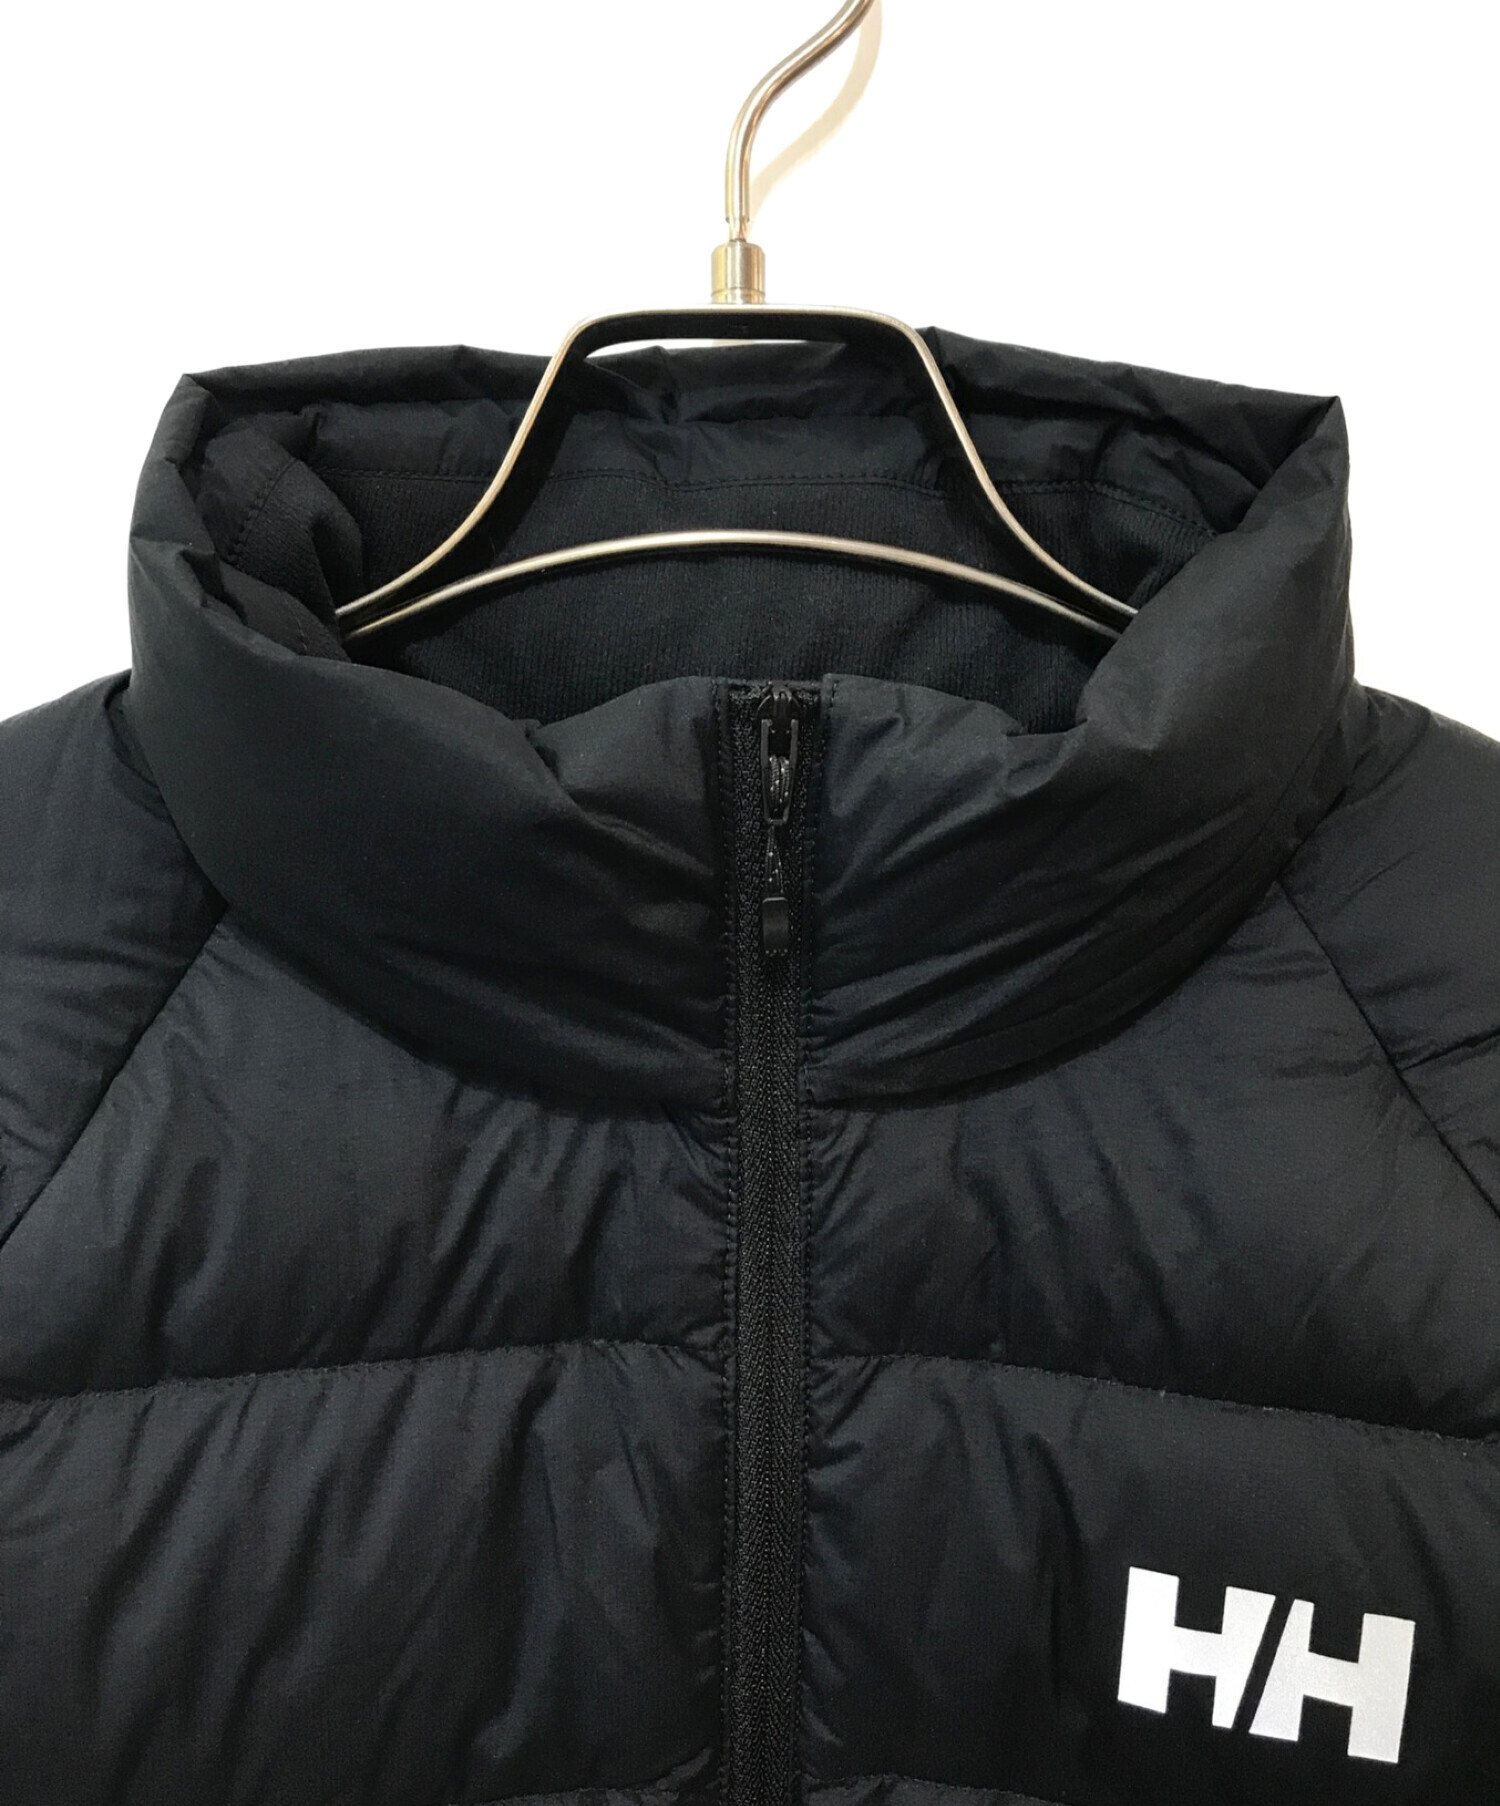 HELLY HANSEN (ヘリーハンセン) Angler Hybrid Down Jacket ブラック サイズ:M